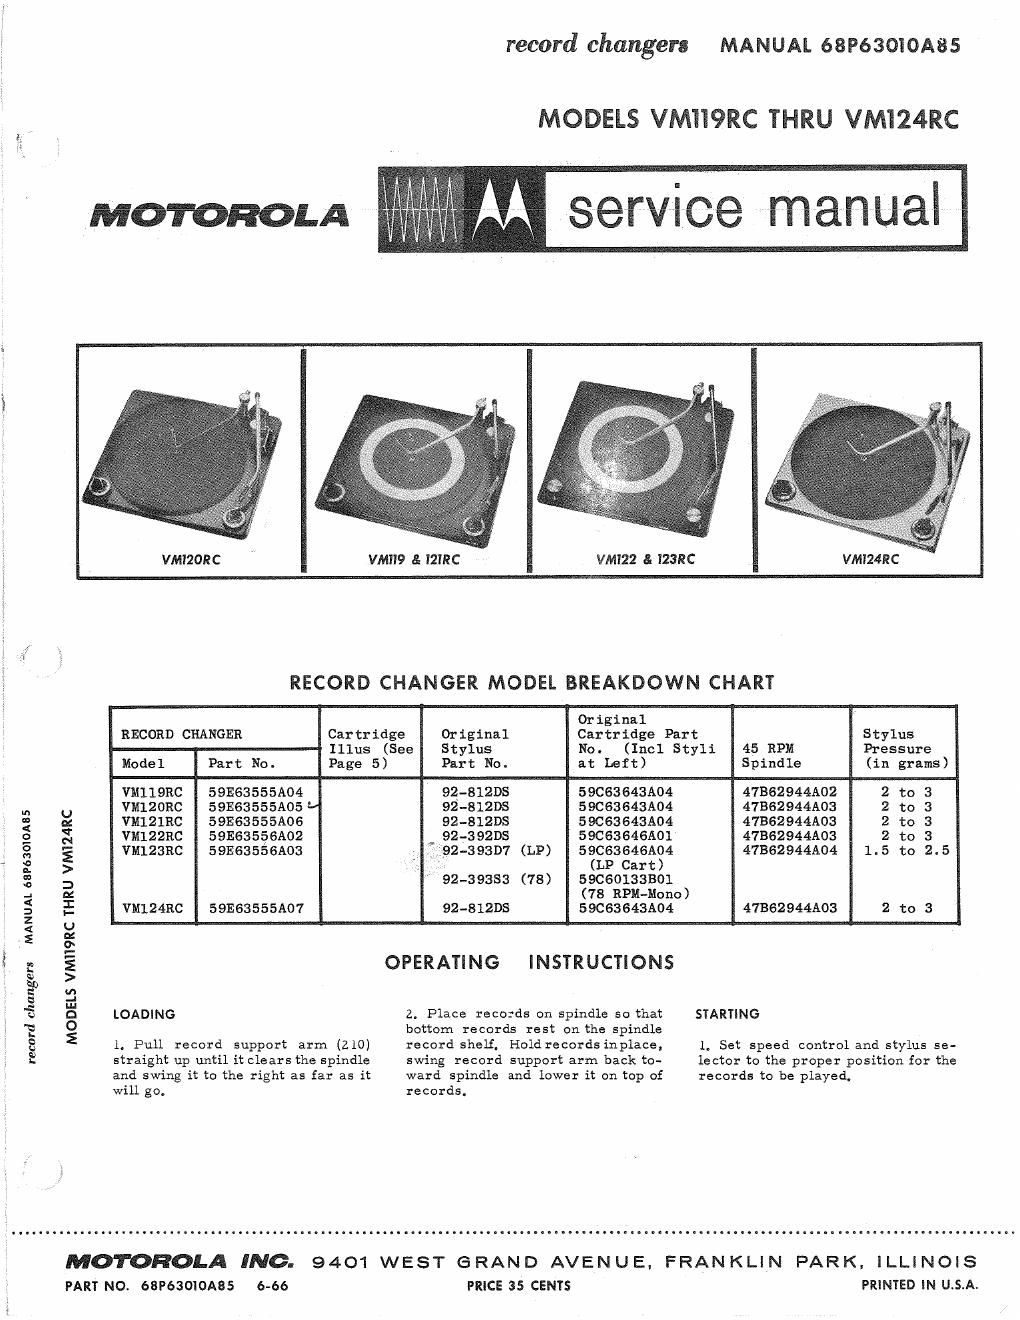 motorola vm 120 rc service manual